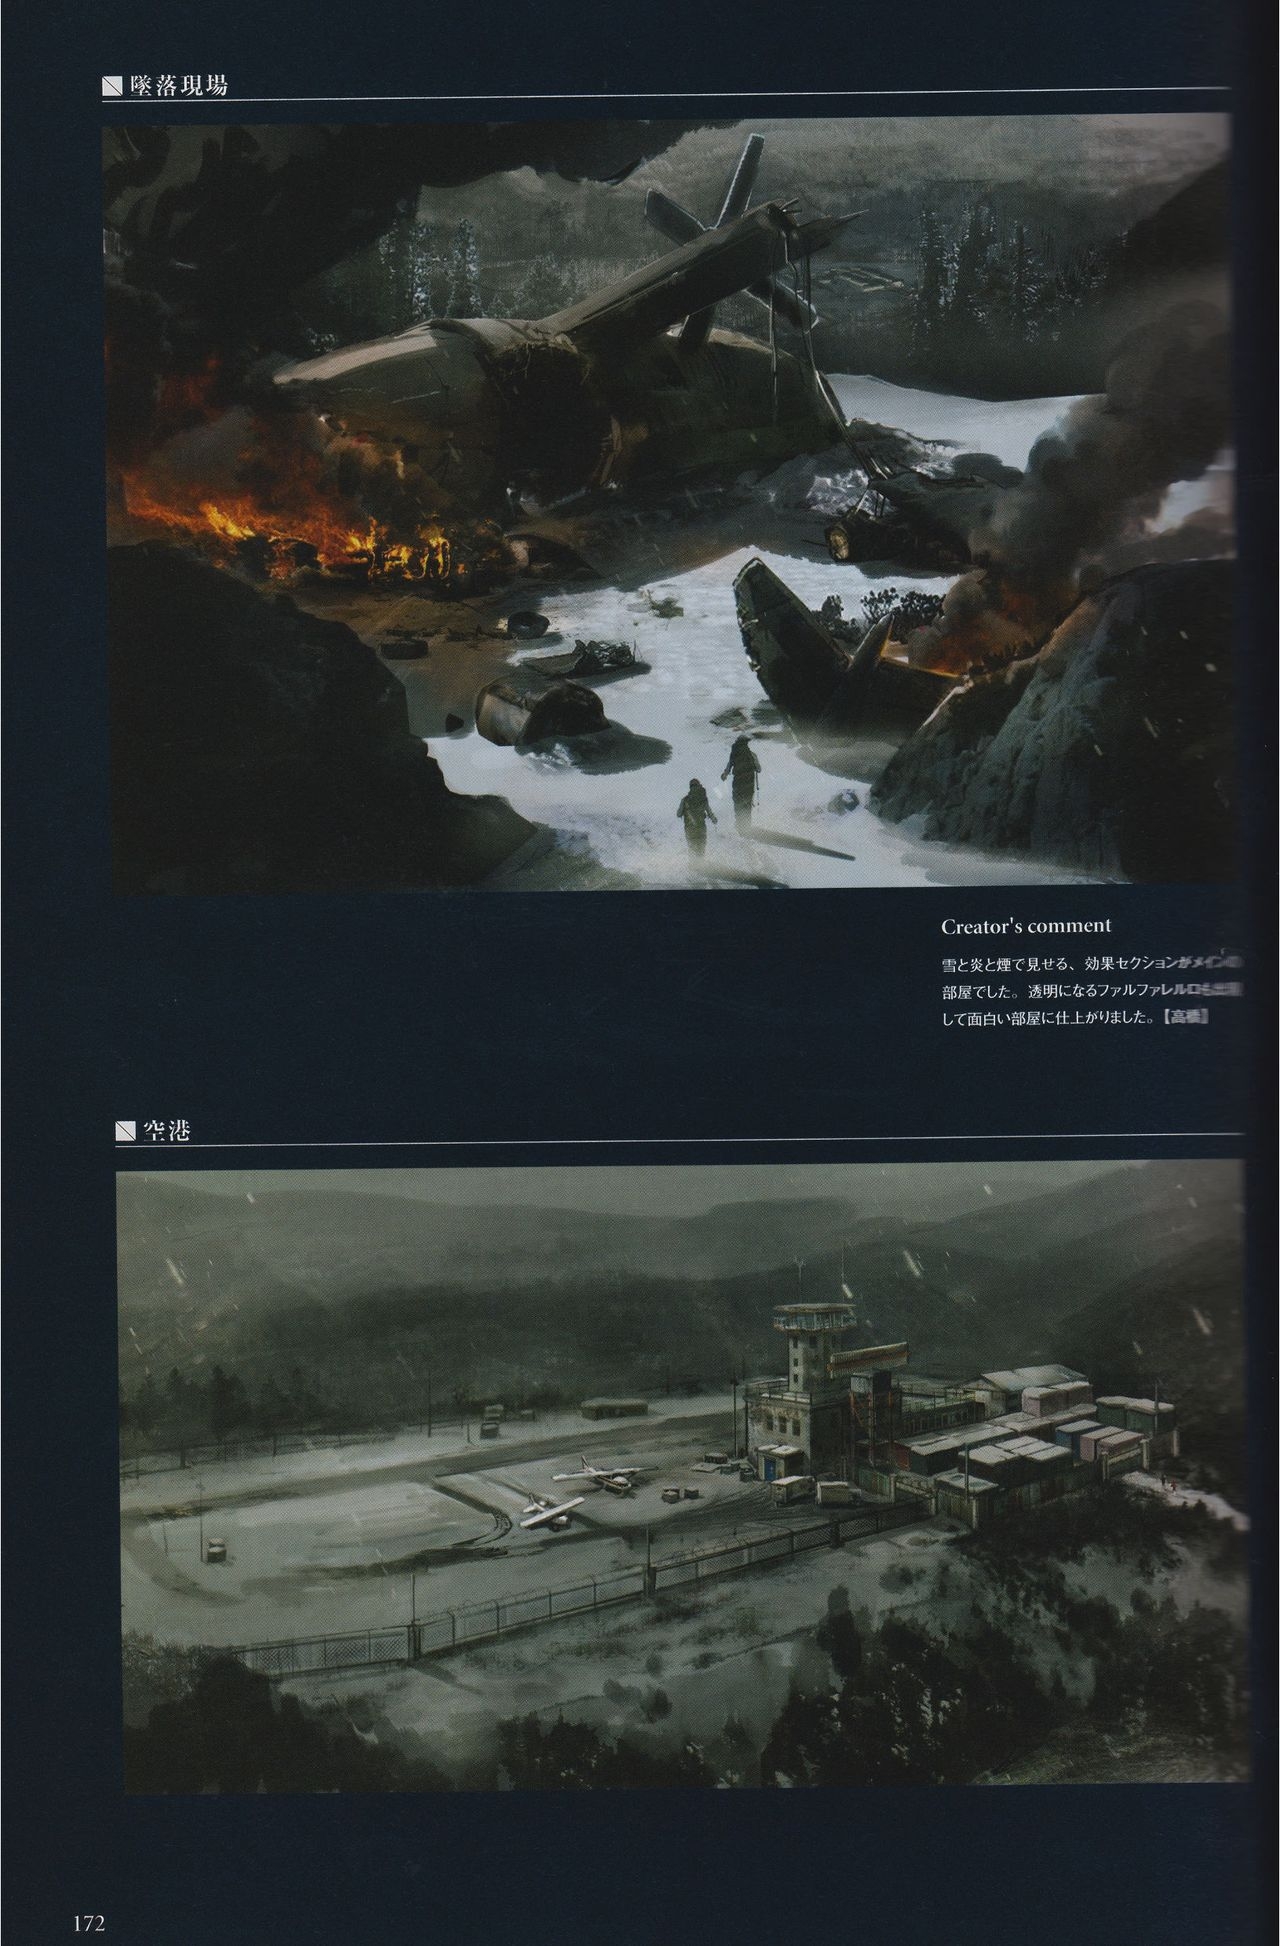 Resident Evil Revelations Unveiled Edition Artbook 174